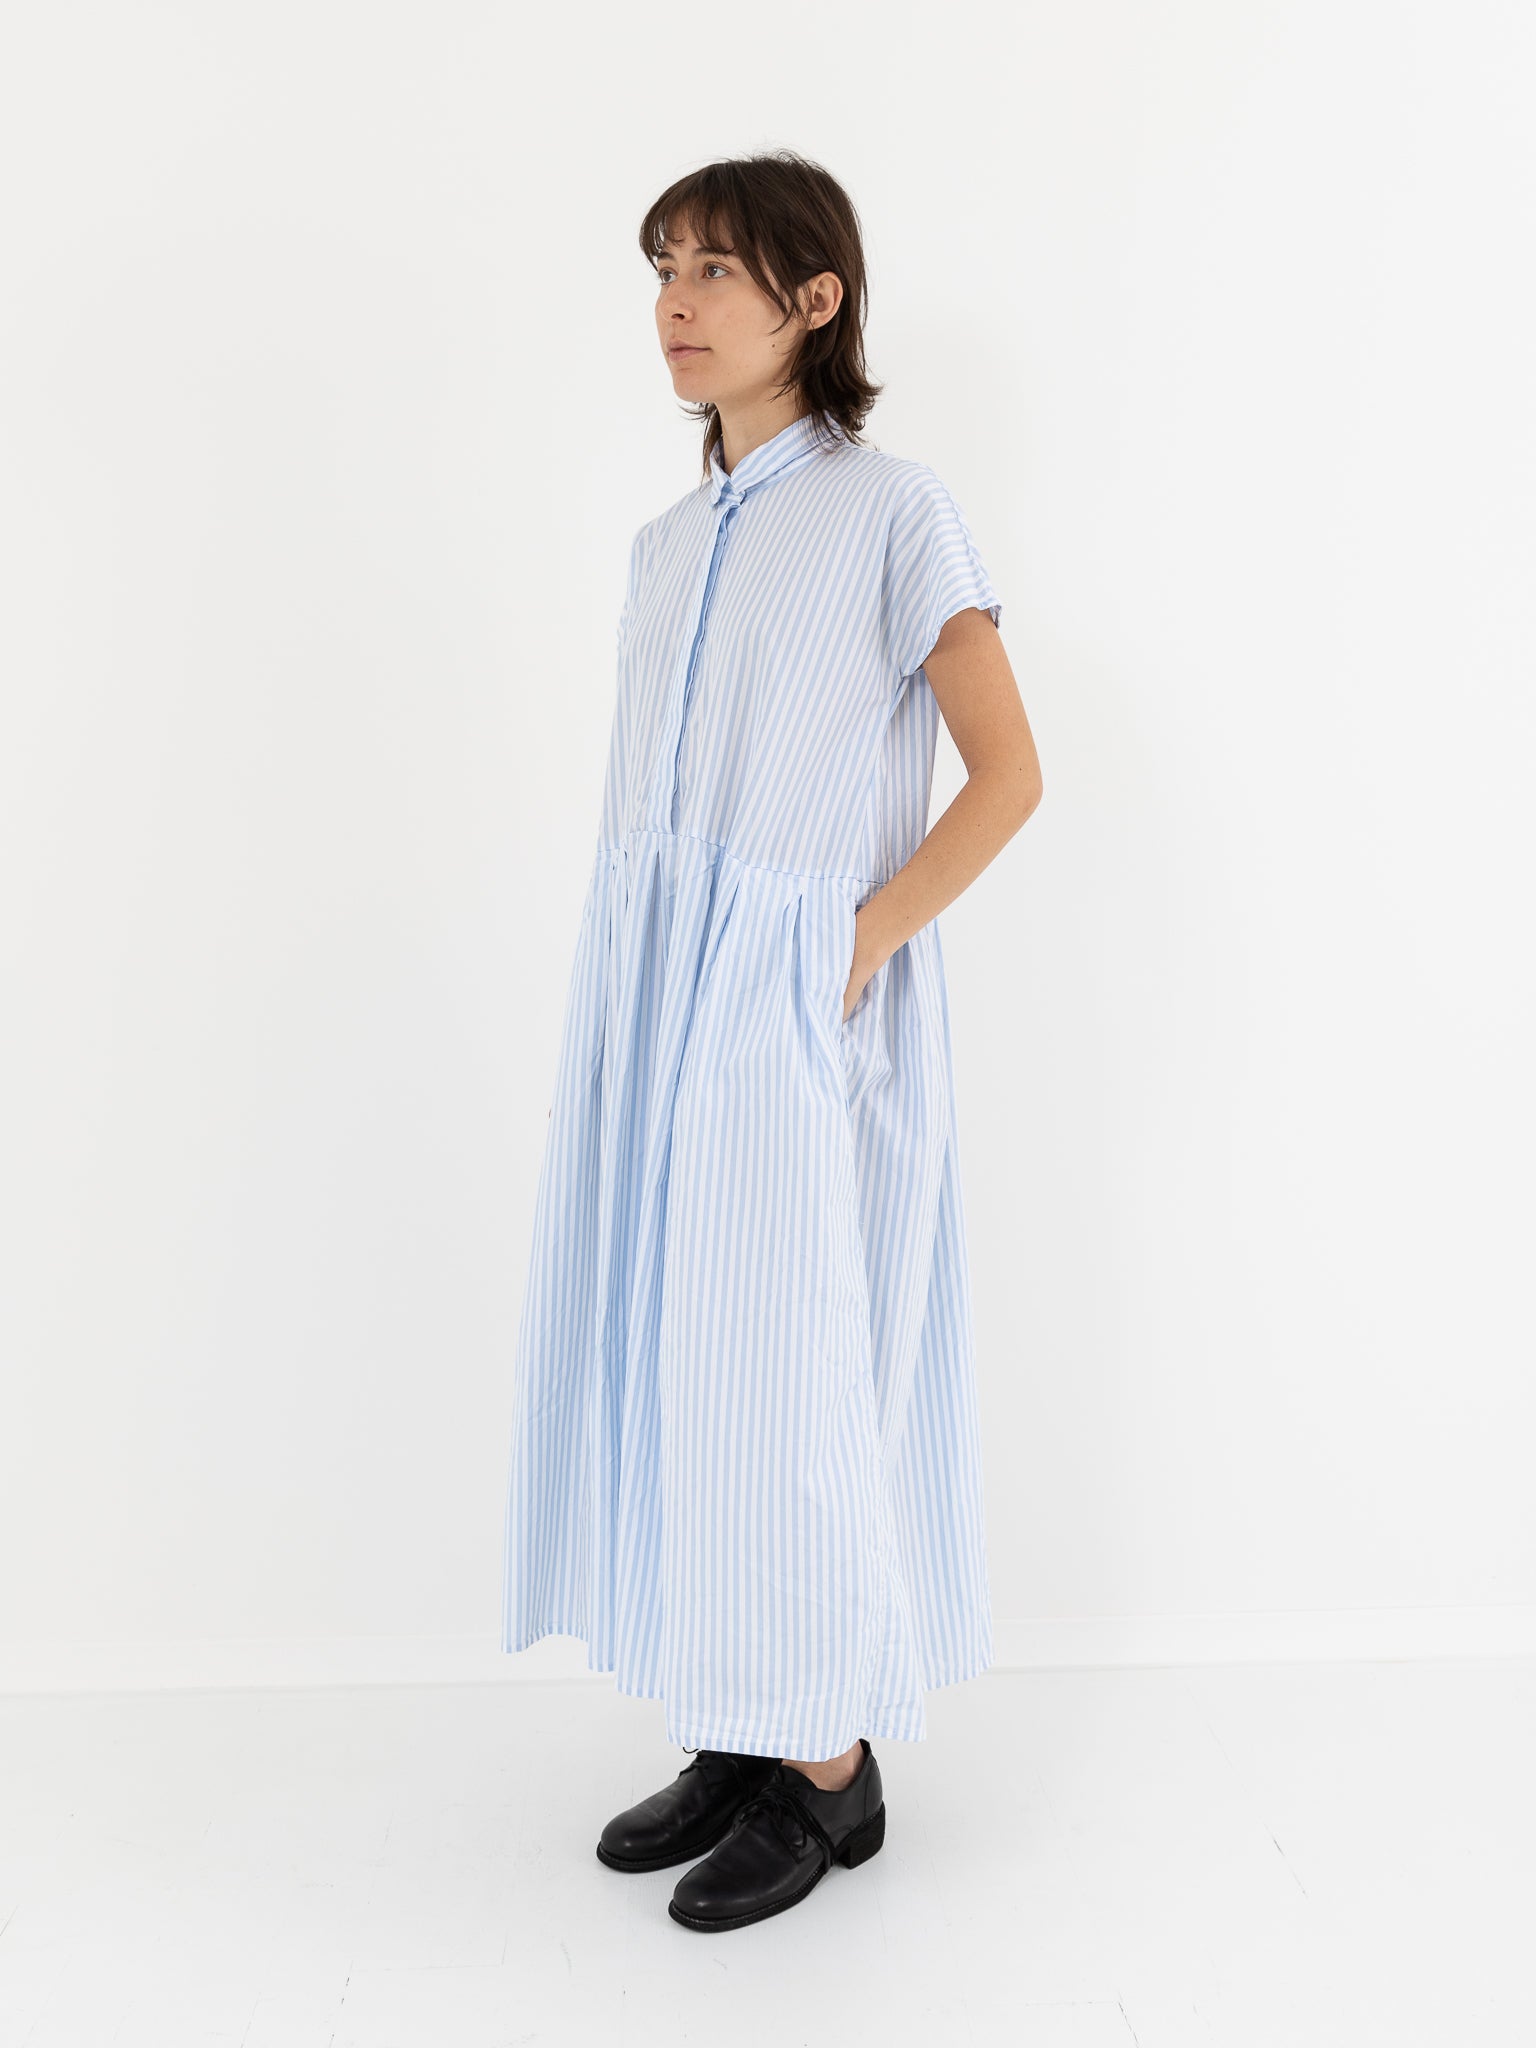 Bergfabel Lena Dress, Blue Stripe - Worthwhile, Inc.